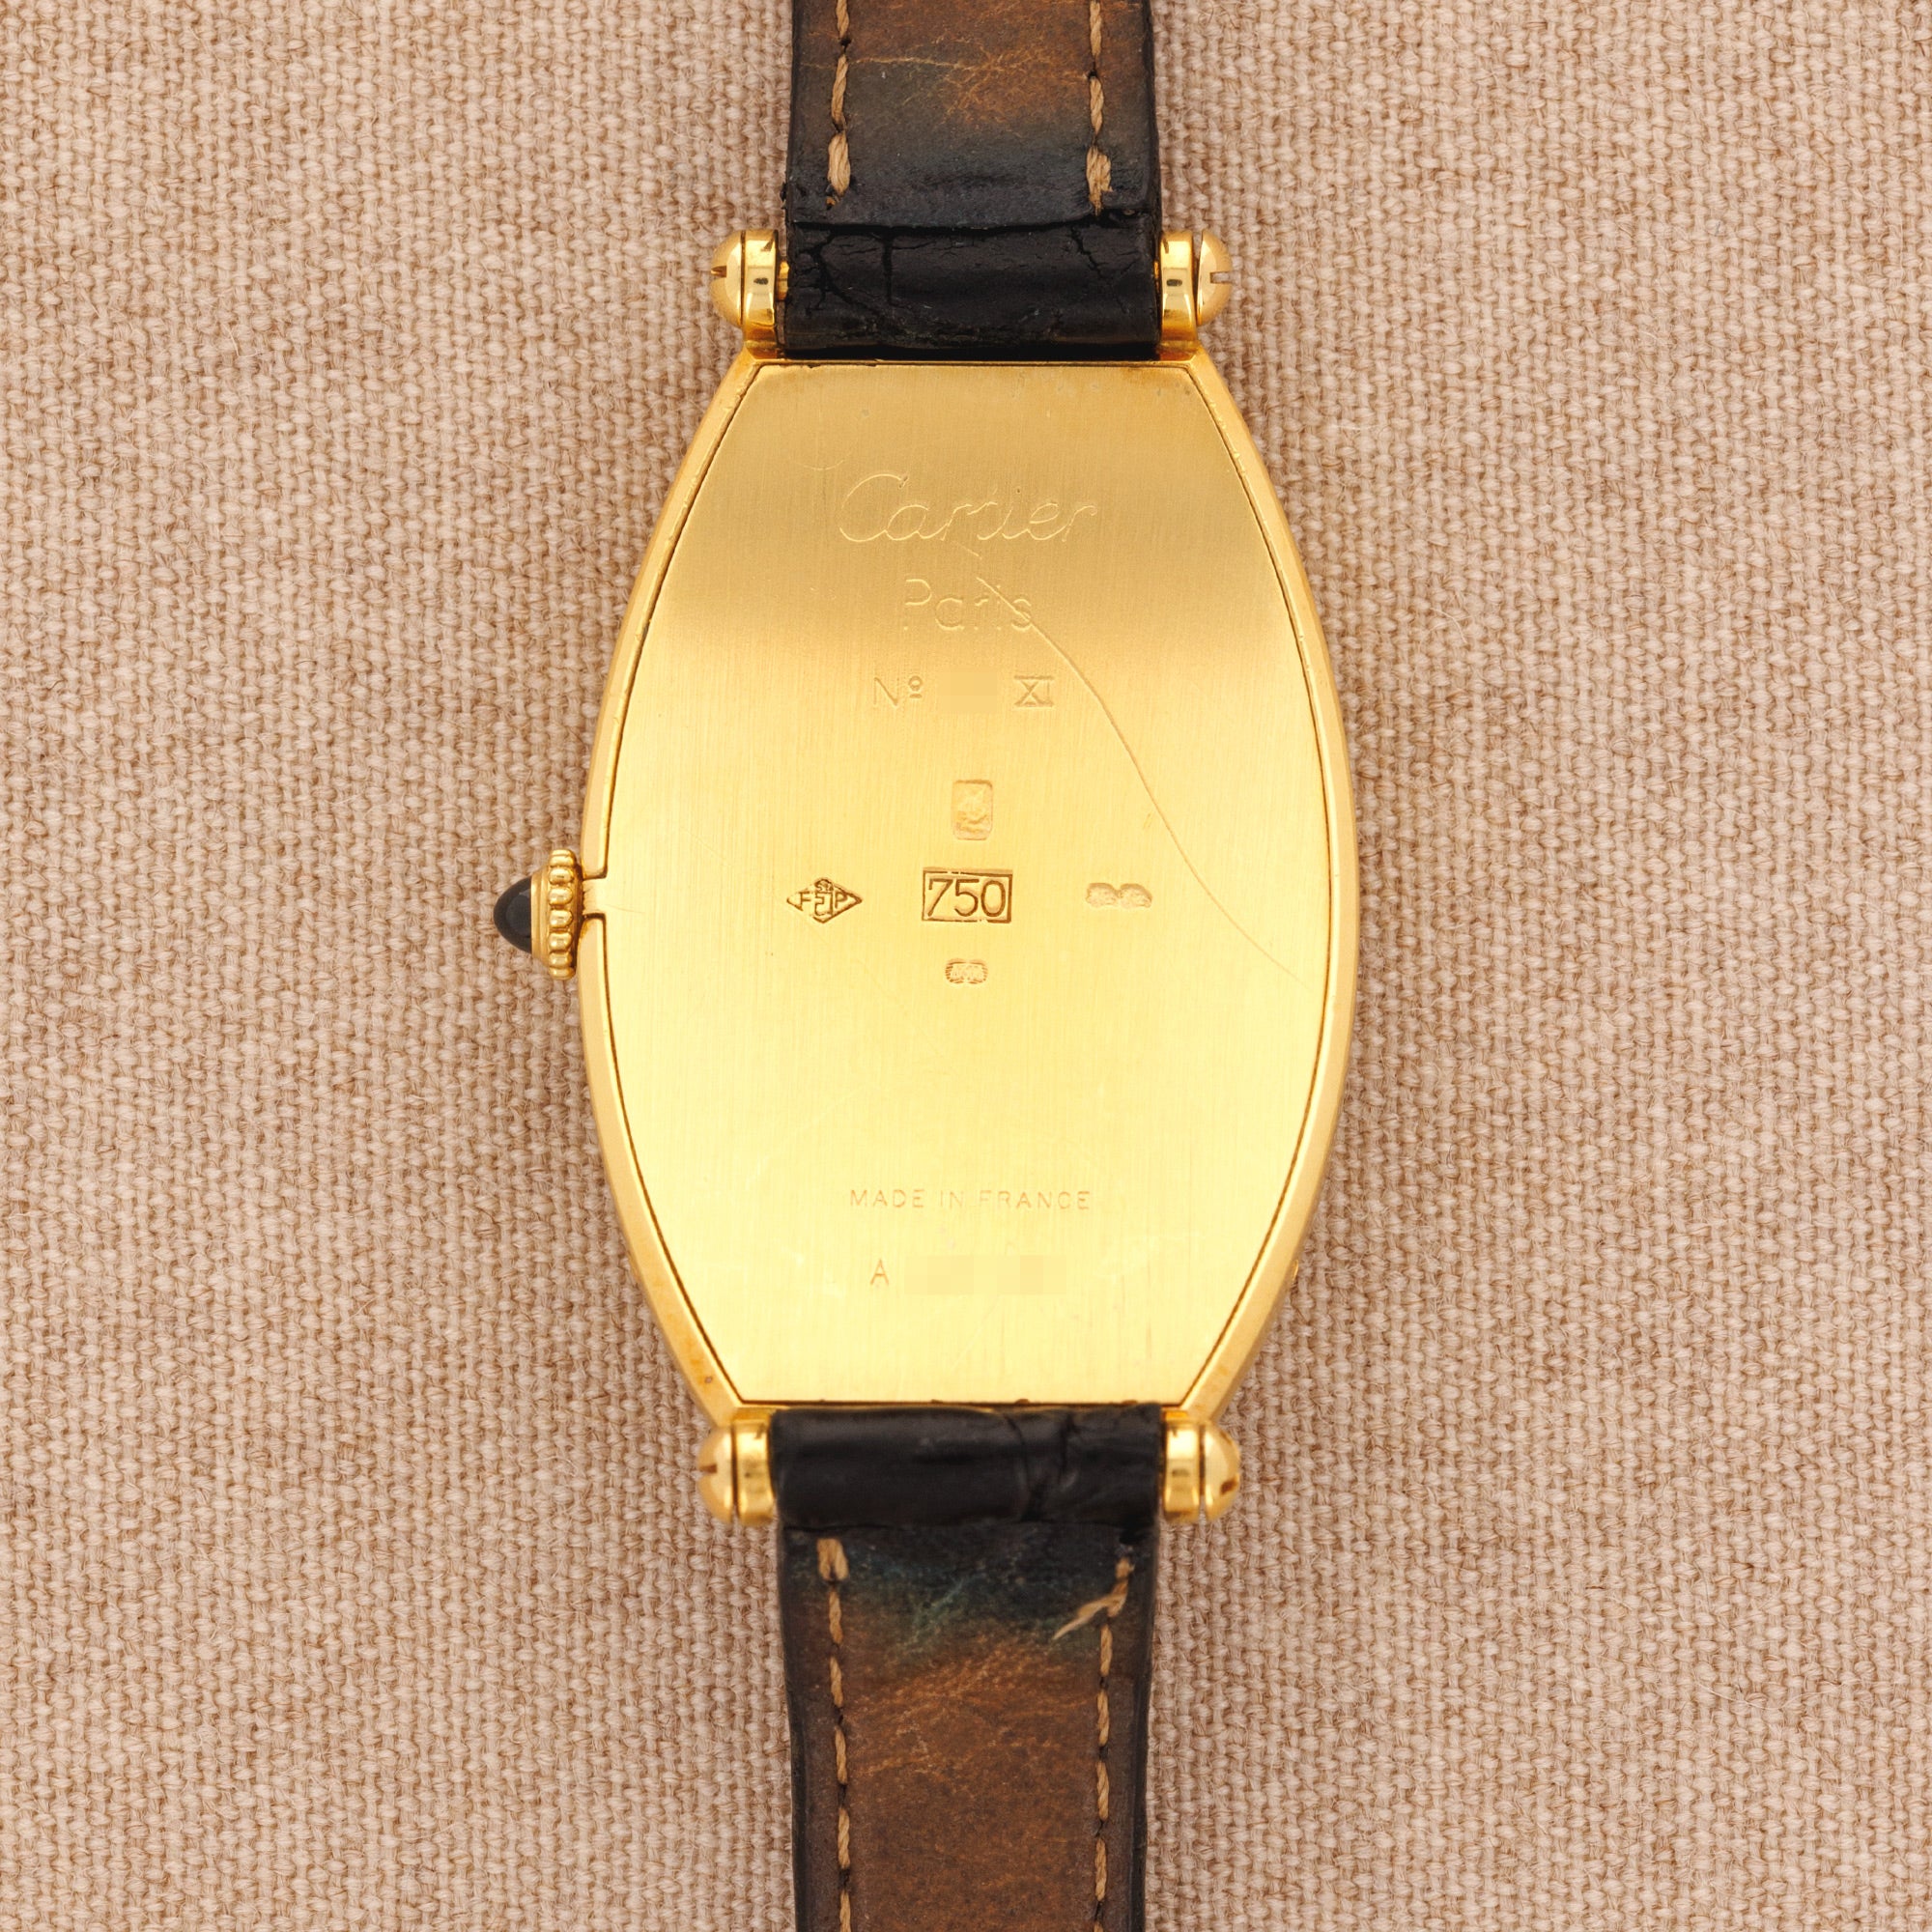 Cartier - Cartier Yellow Gold Tonneau Watch - The Keystone Watches